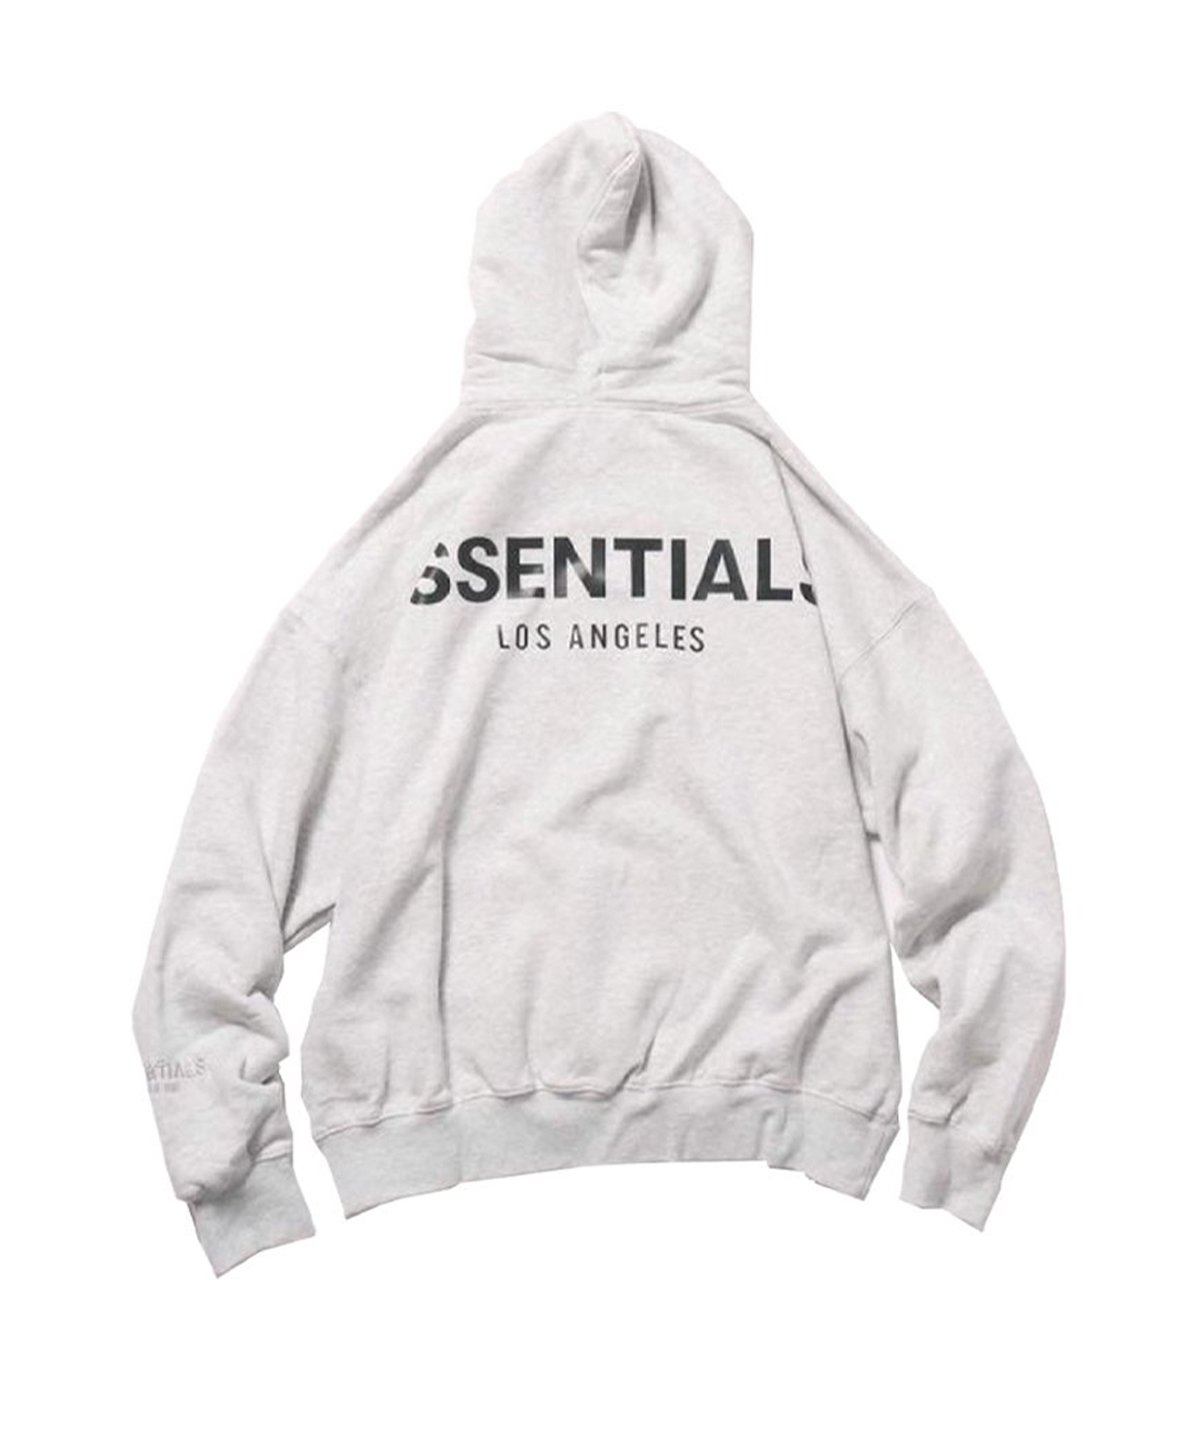 essentials photo pullover hoodie